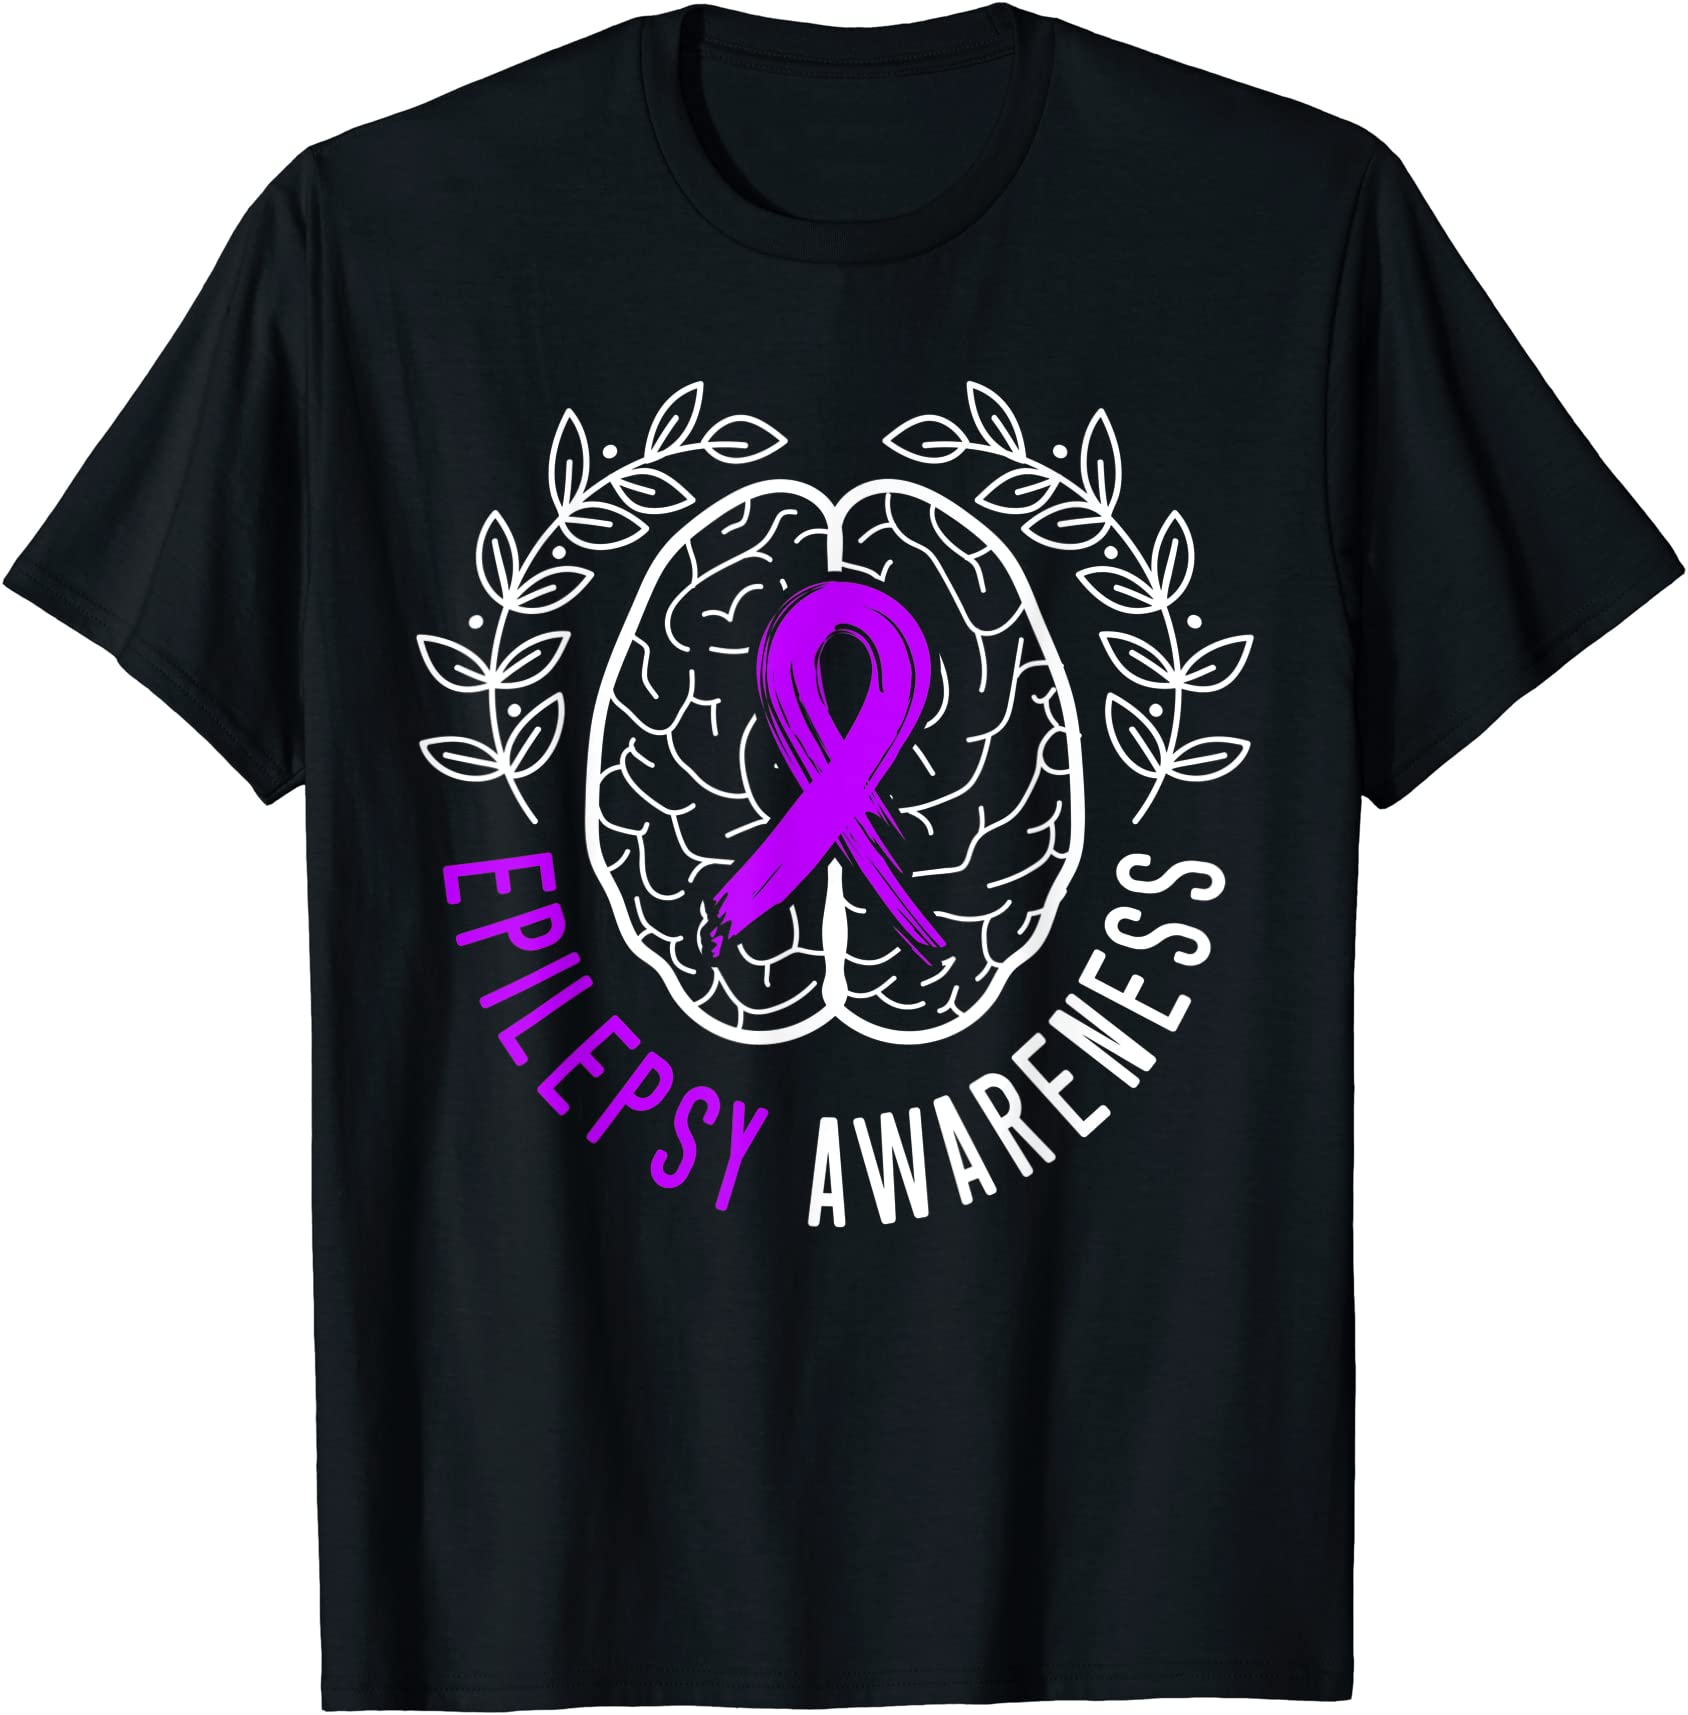 epilepsy awareness epileptic seizure i wear purple t shirt men - Buy t ...